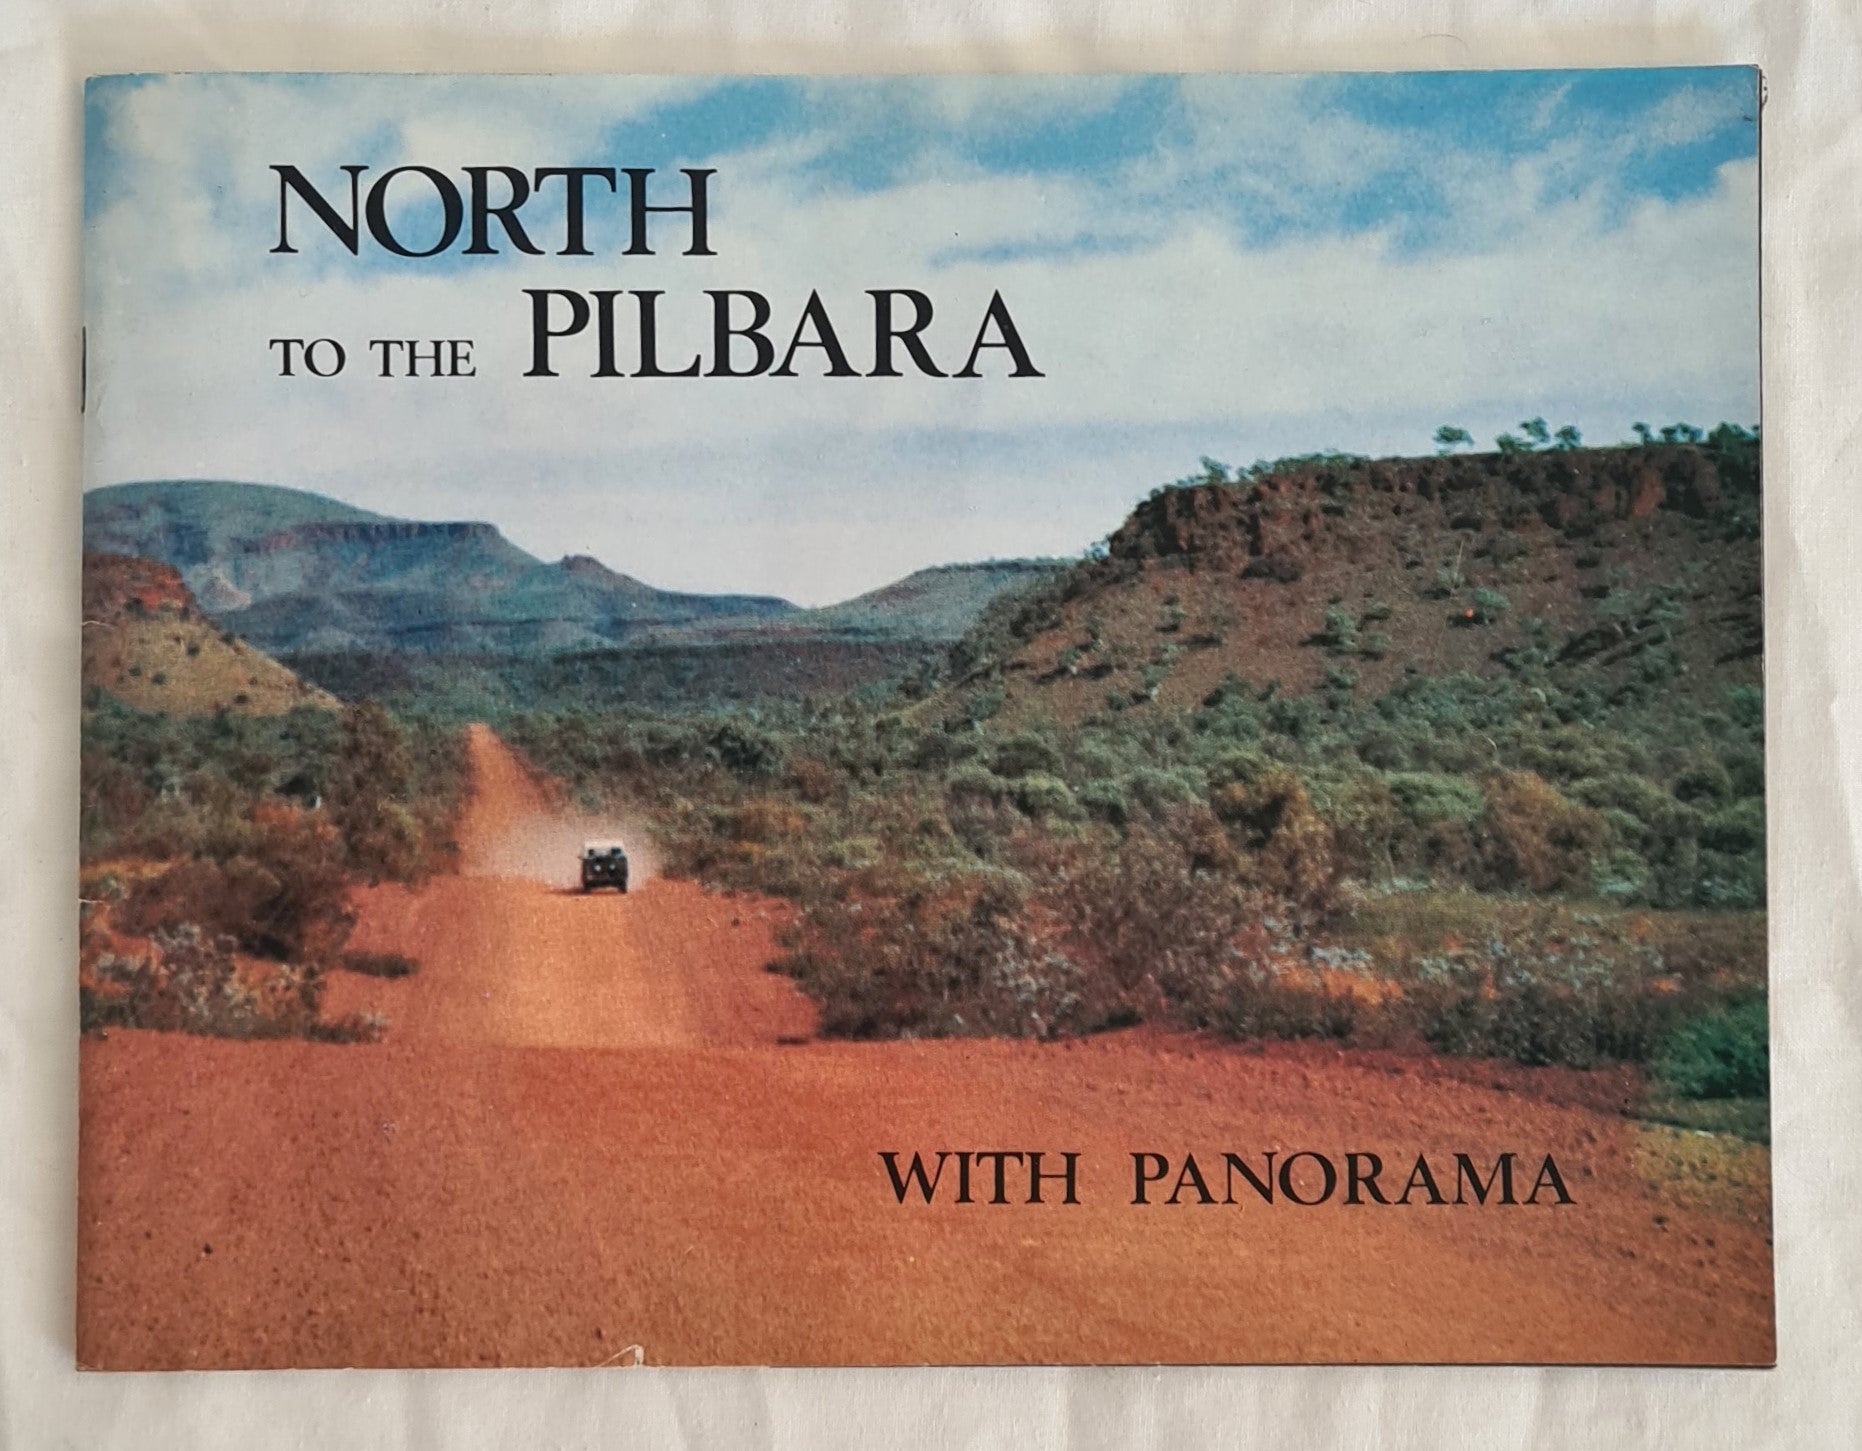 North to the Pilbara  With Panaroma  Produced by Jack Edmonds